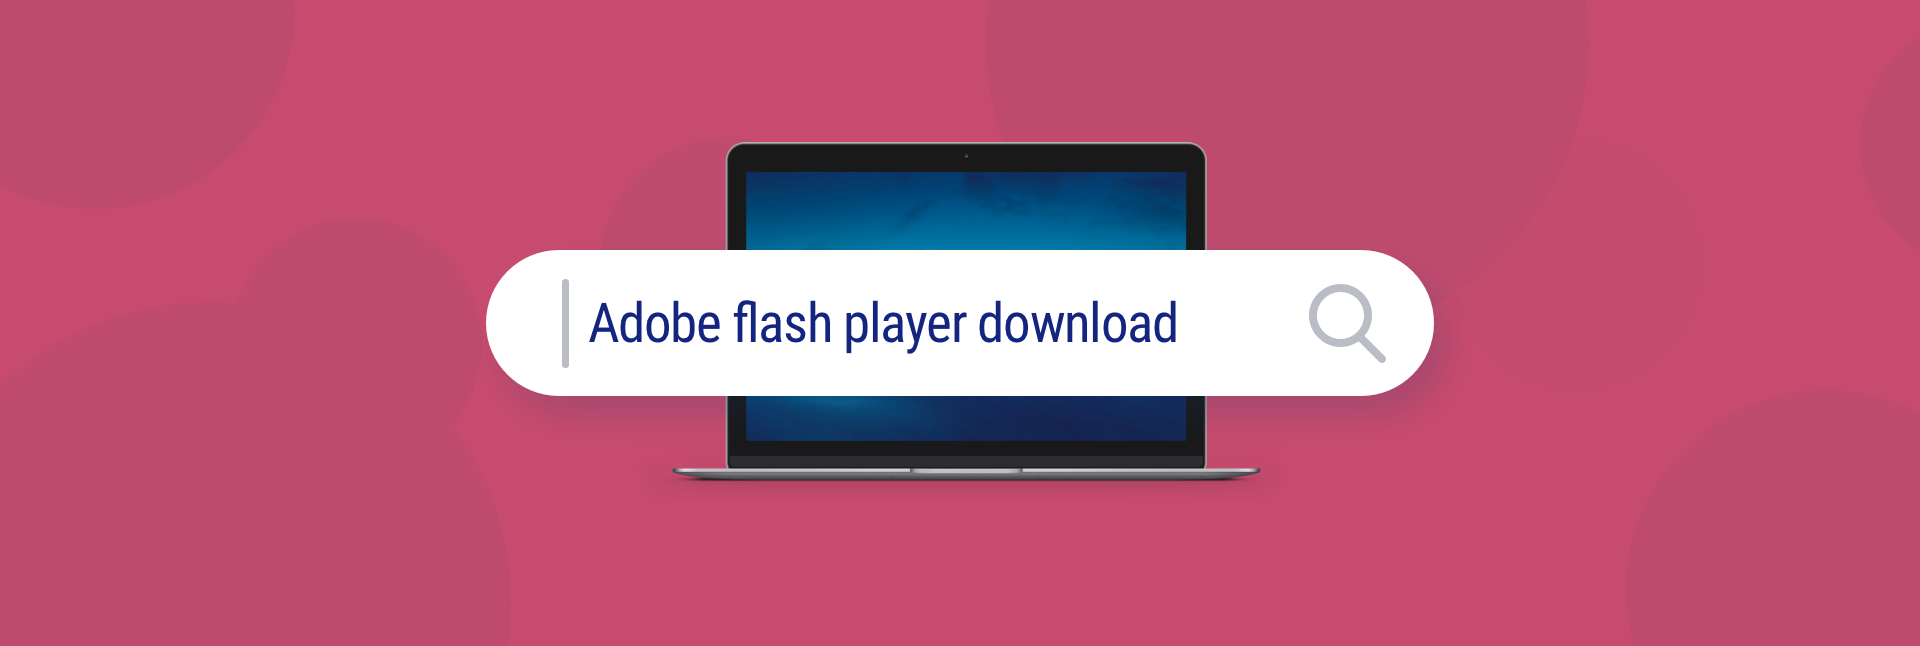 adobe flash player download windows 10 chrome